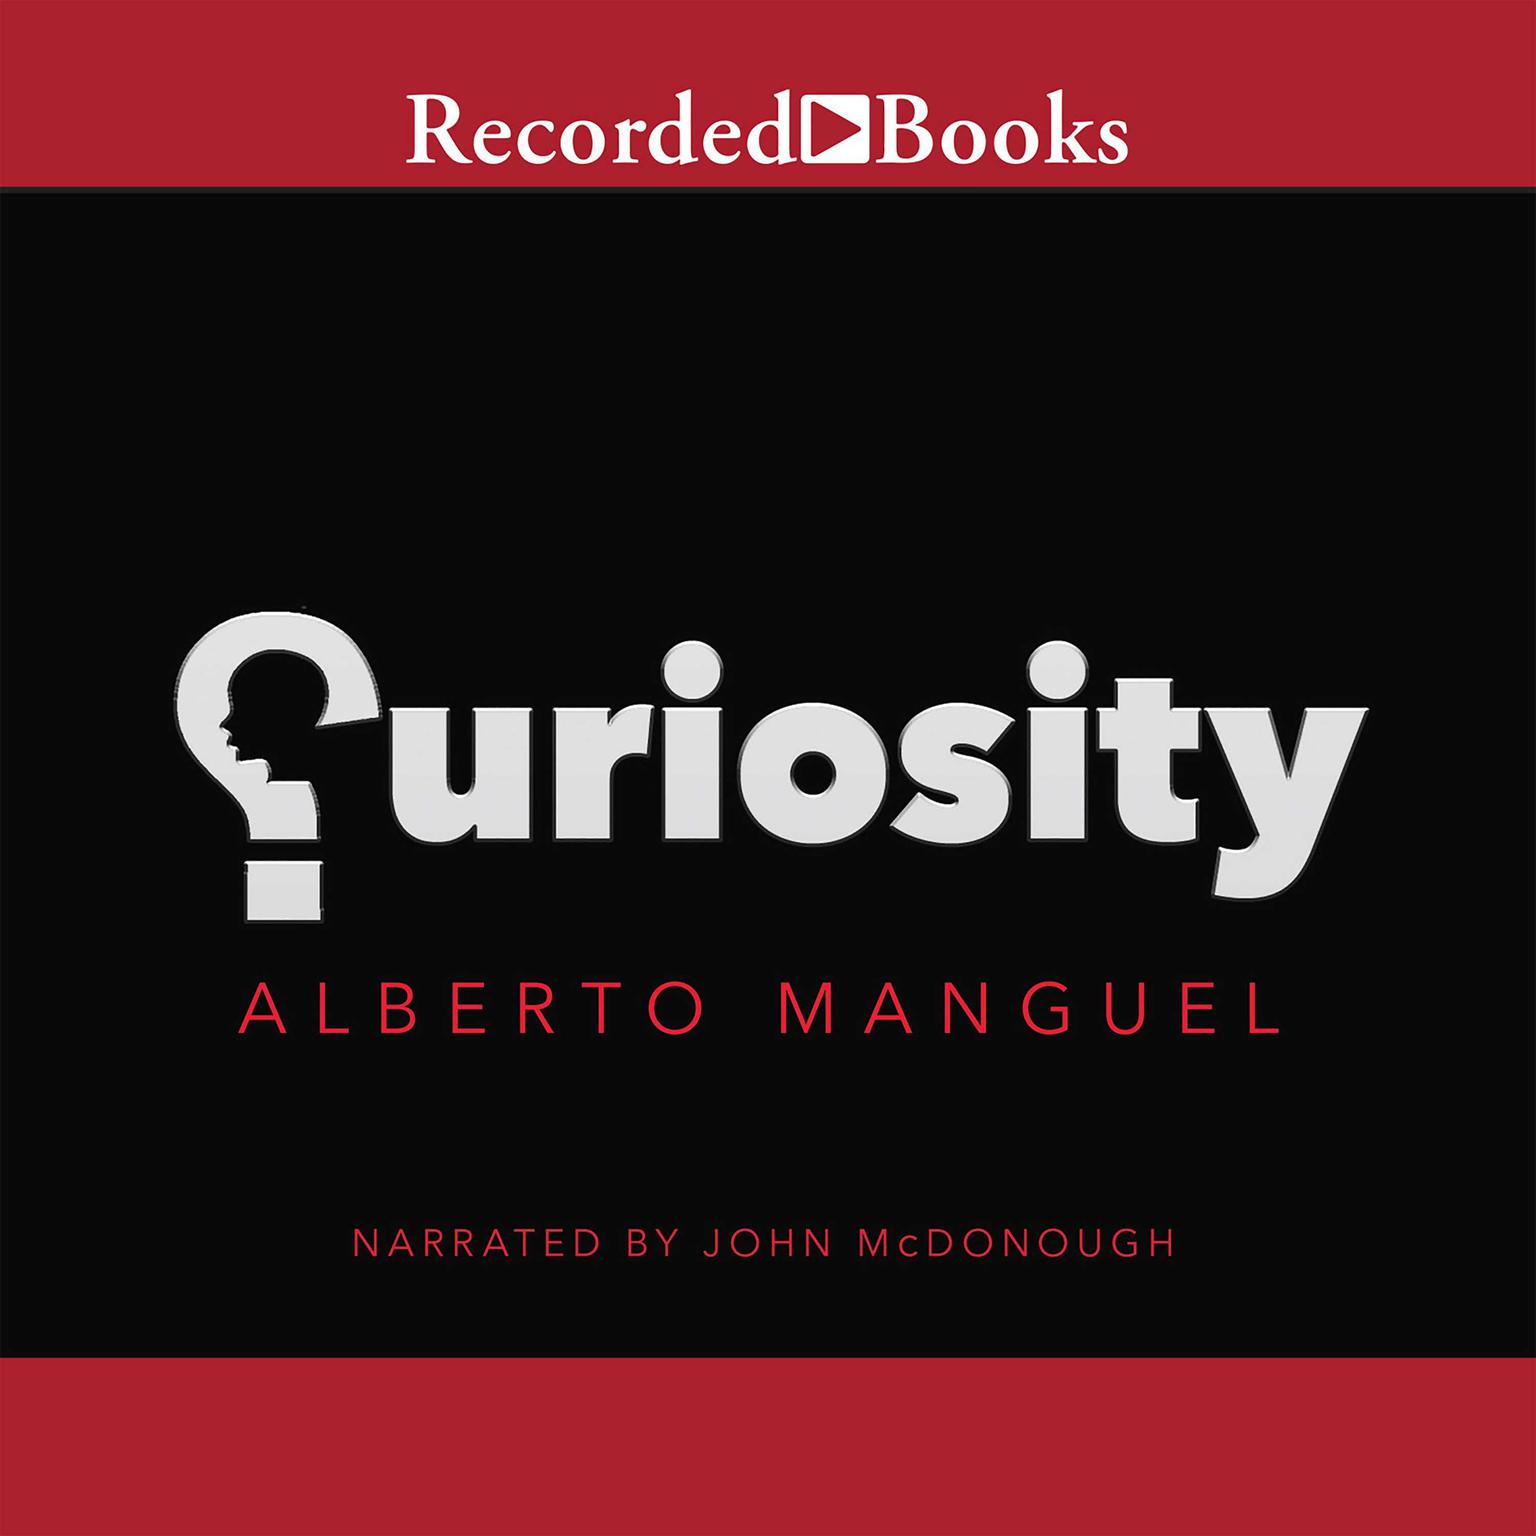 Curiosity Audiobook, by Alberto Manguel